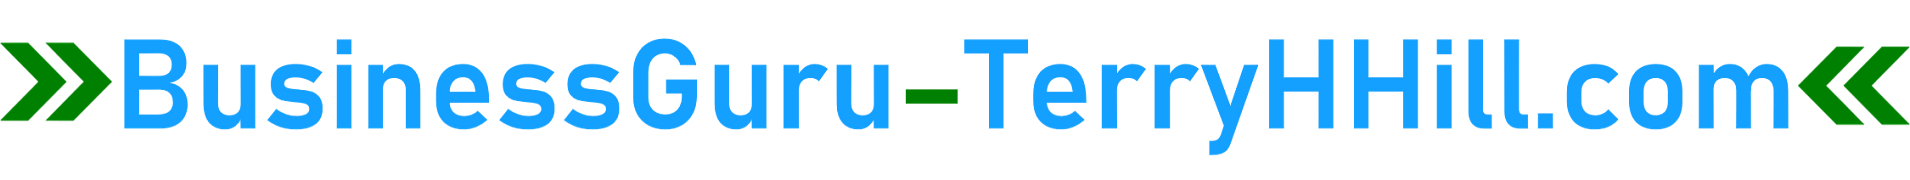 Logo-BusinessGuru-TerryHHill.com